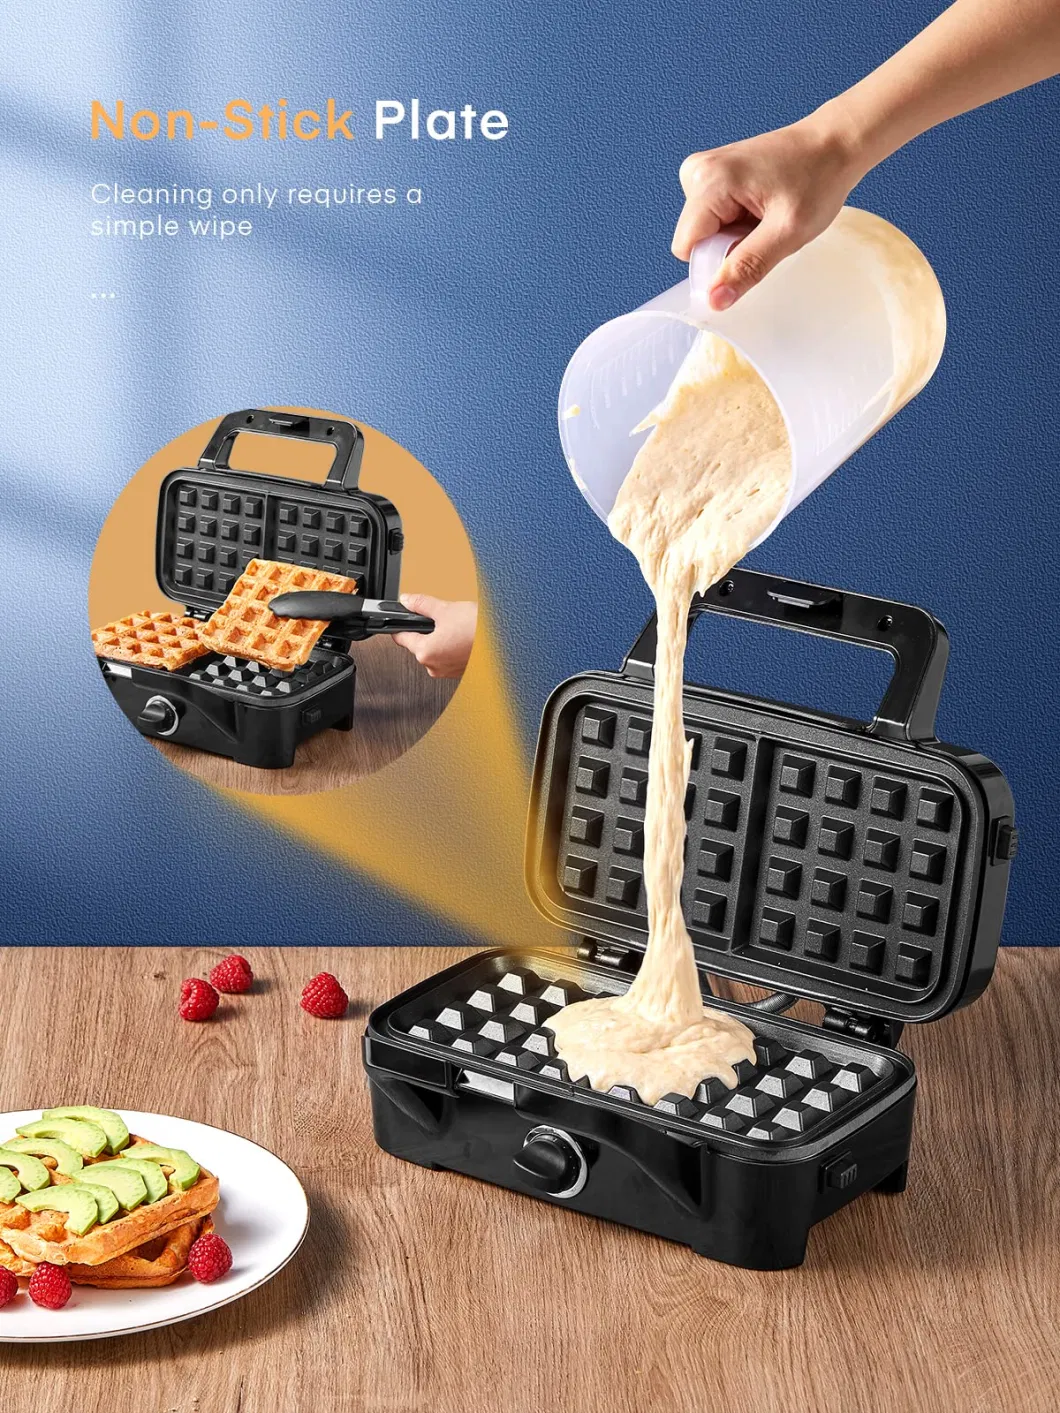 Indicator Lights Interchangeable Non-Stick Panini Press Removable Plates Waffle Sandwich Maker